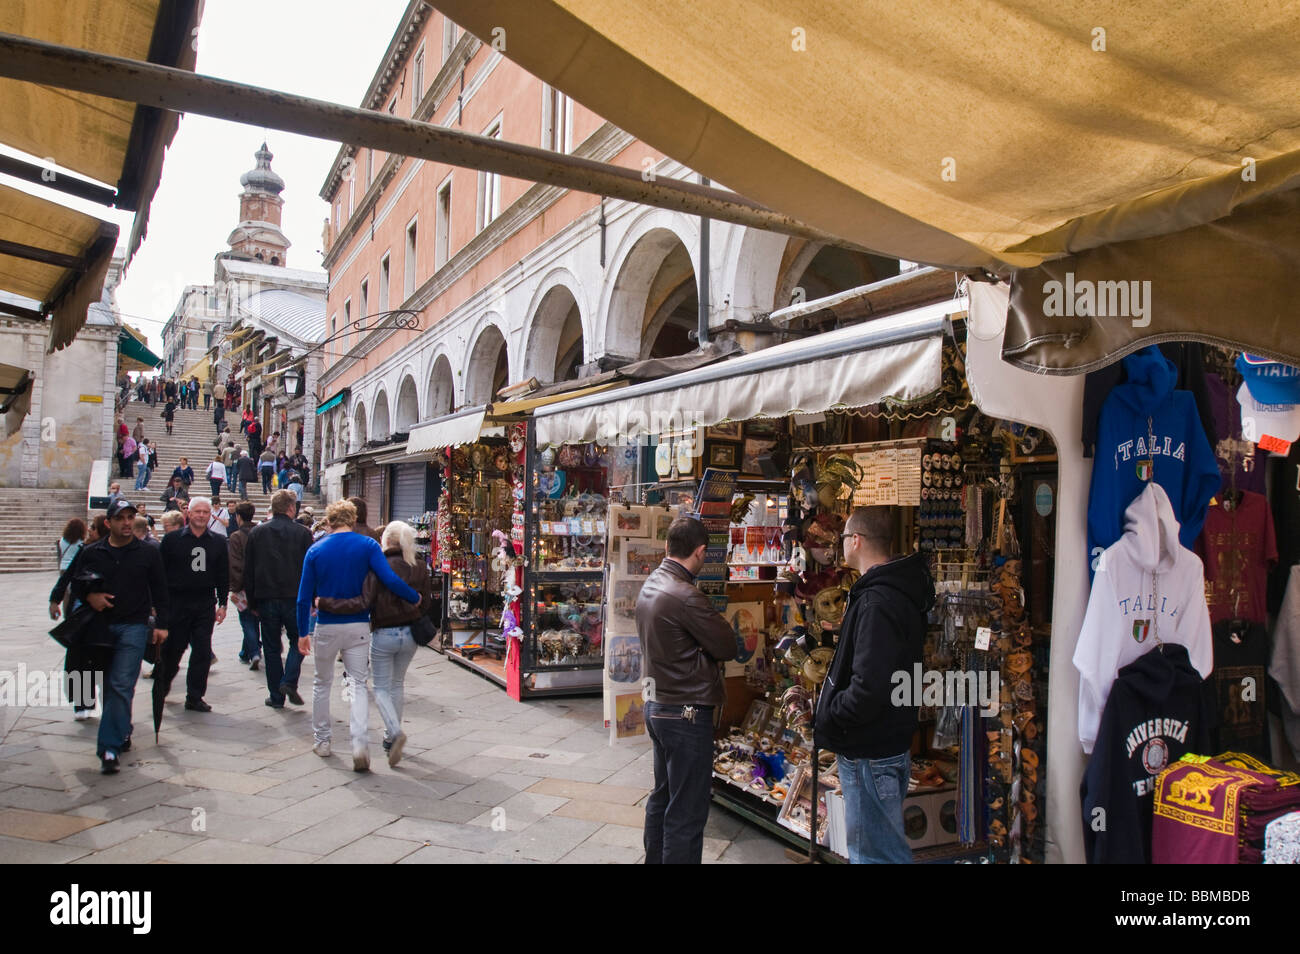 Souvenier stalls lining the street leading to Rialto Bridge San Polo Venice Italy Stock Photo